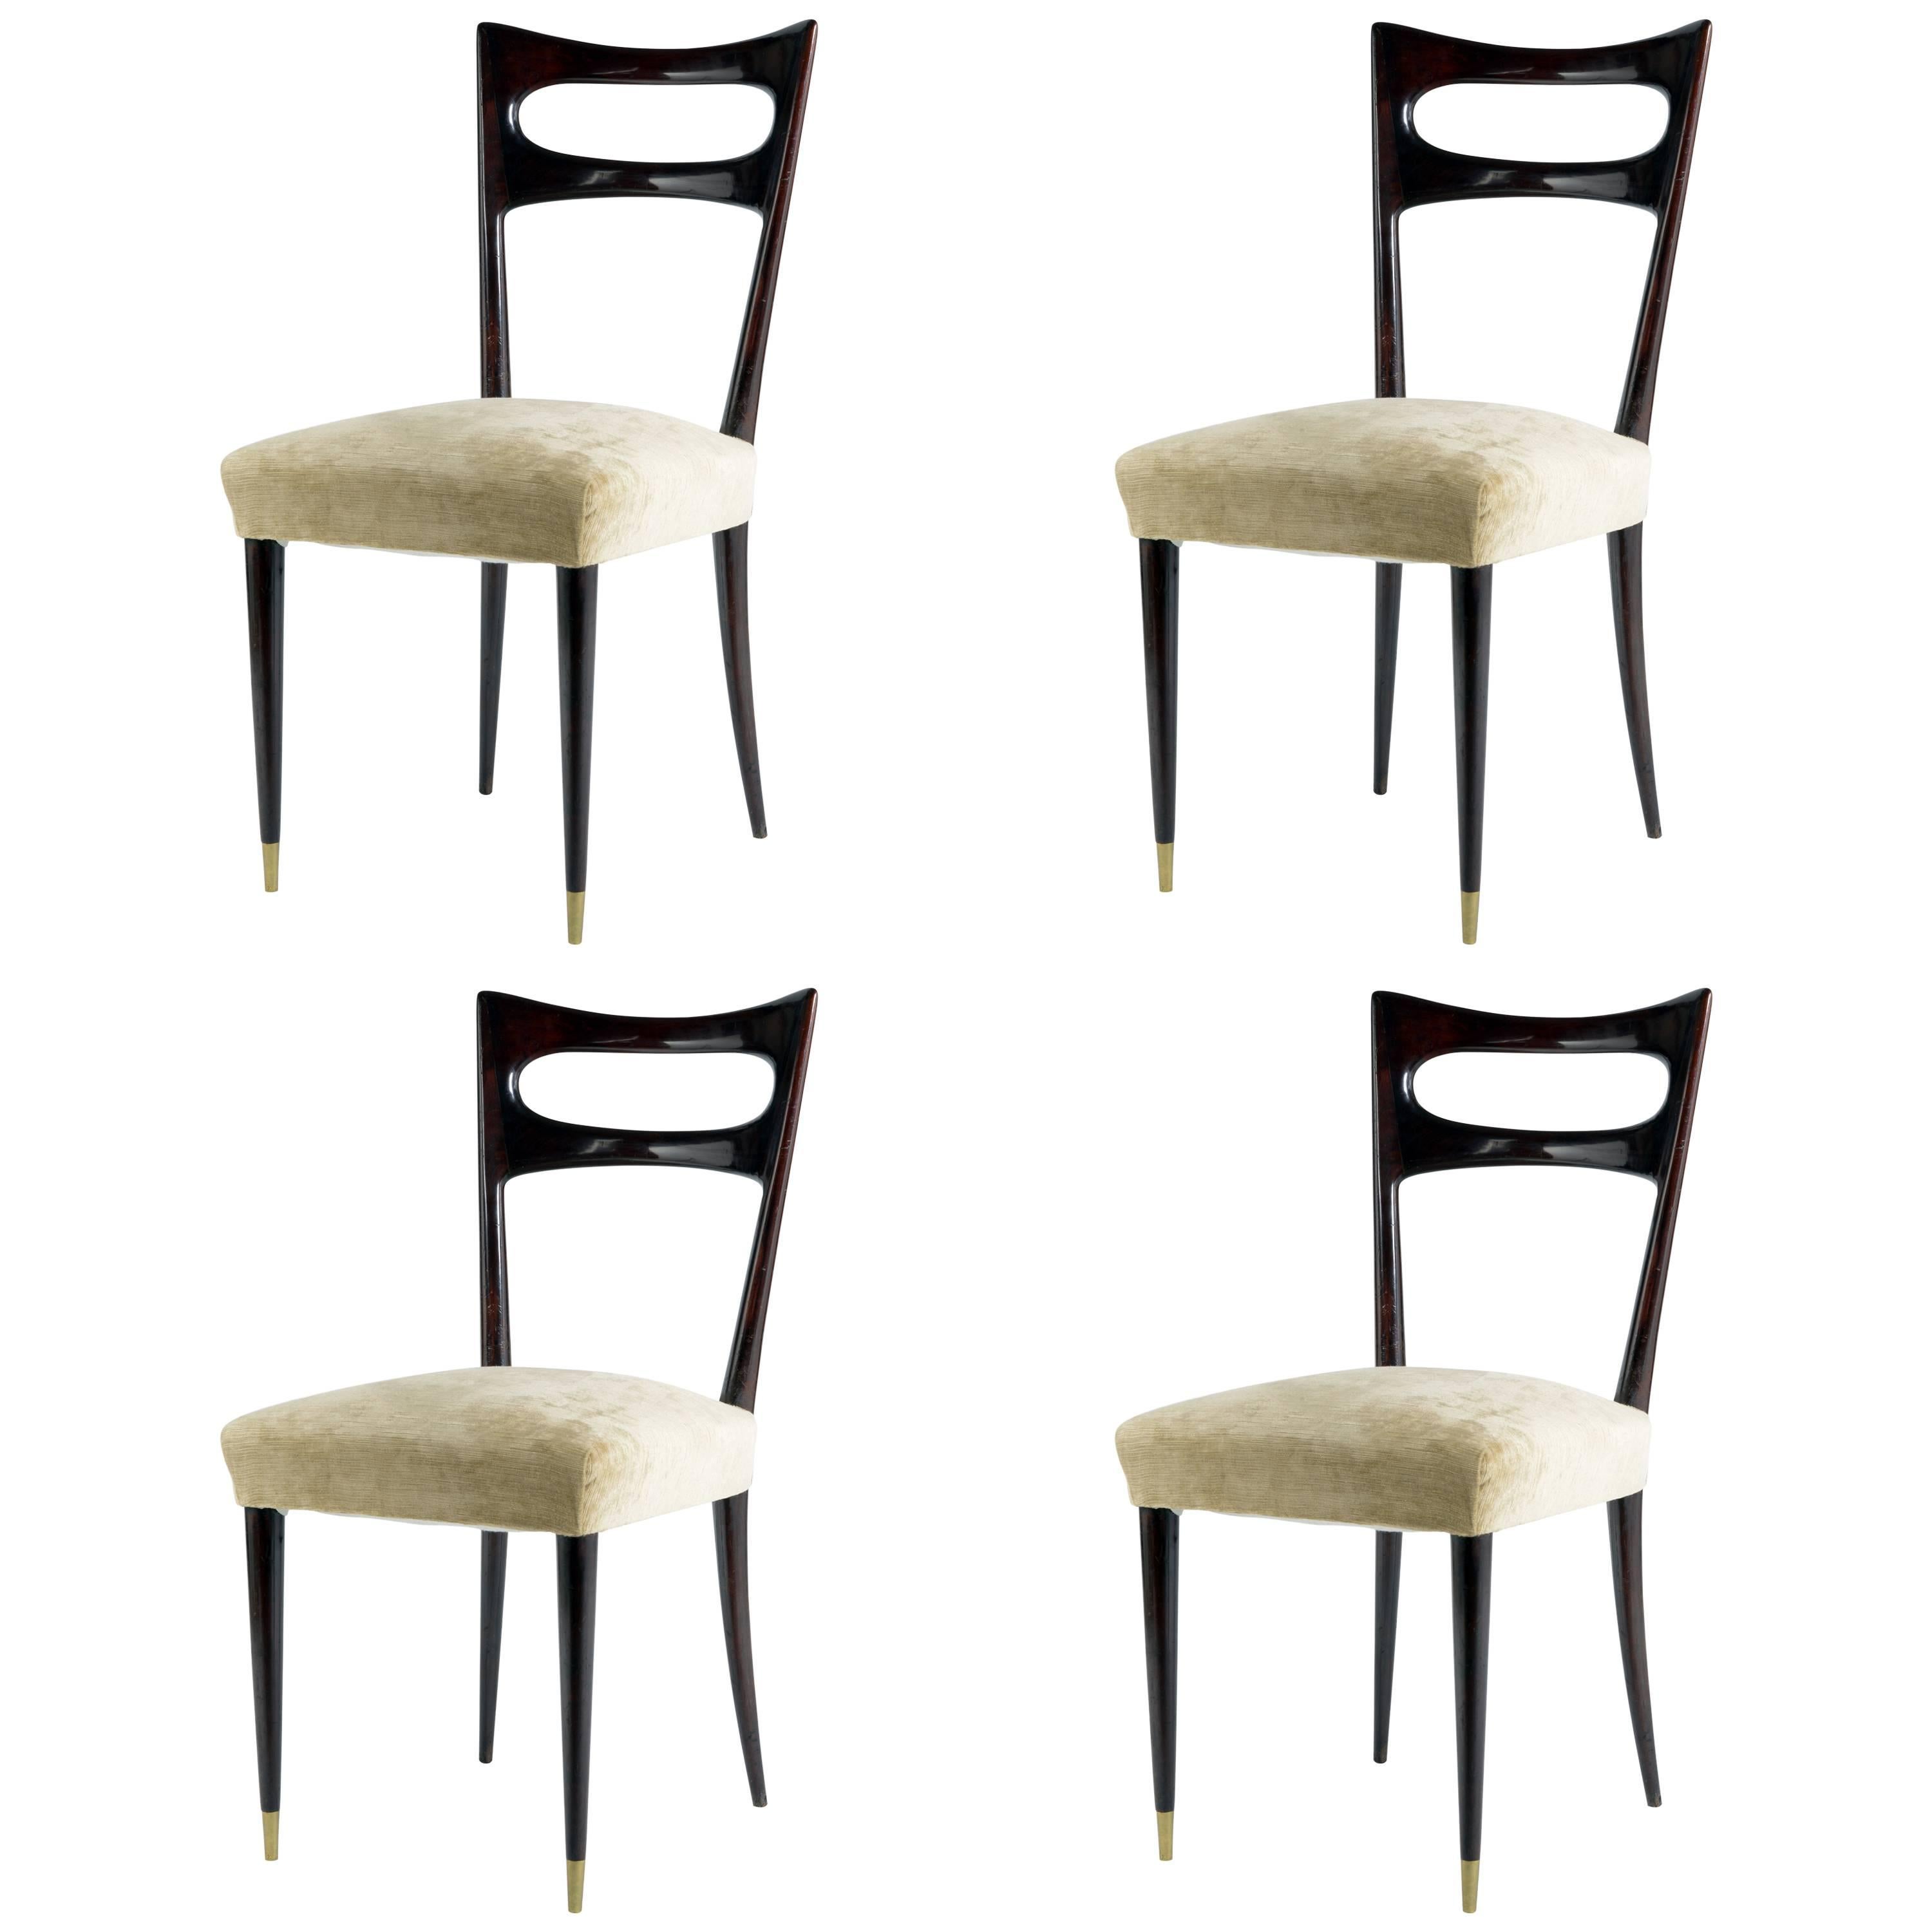 Four Stylish Italian 1950s Chairs by Paolo Buffa